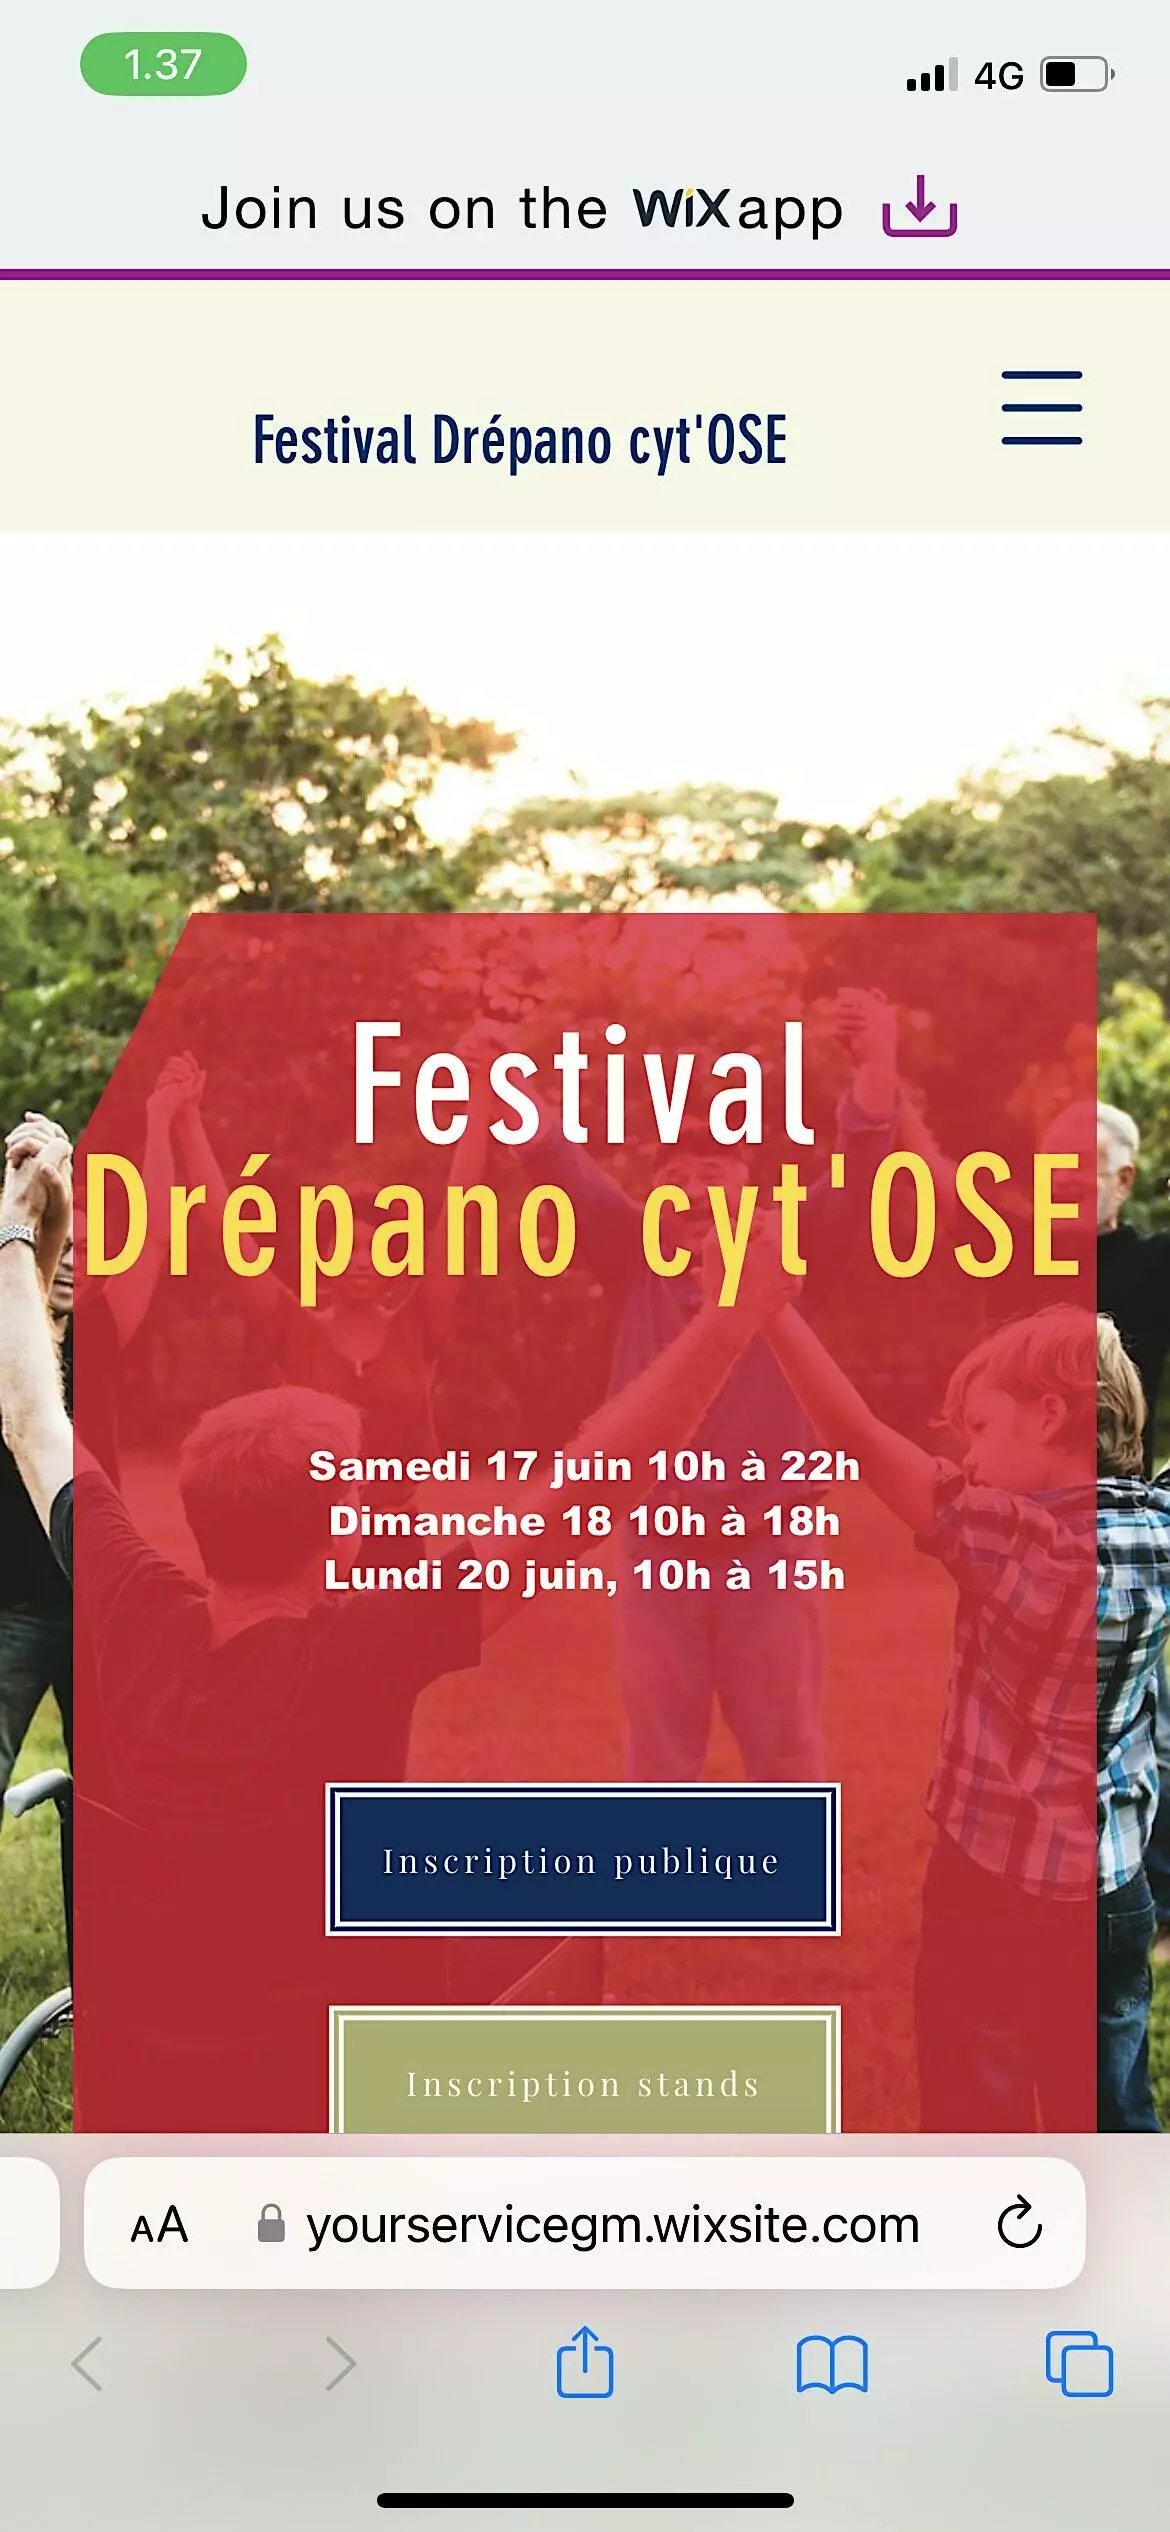 Festivals-Festival Drépano cyt’OSE